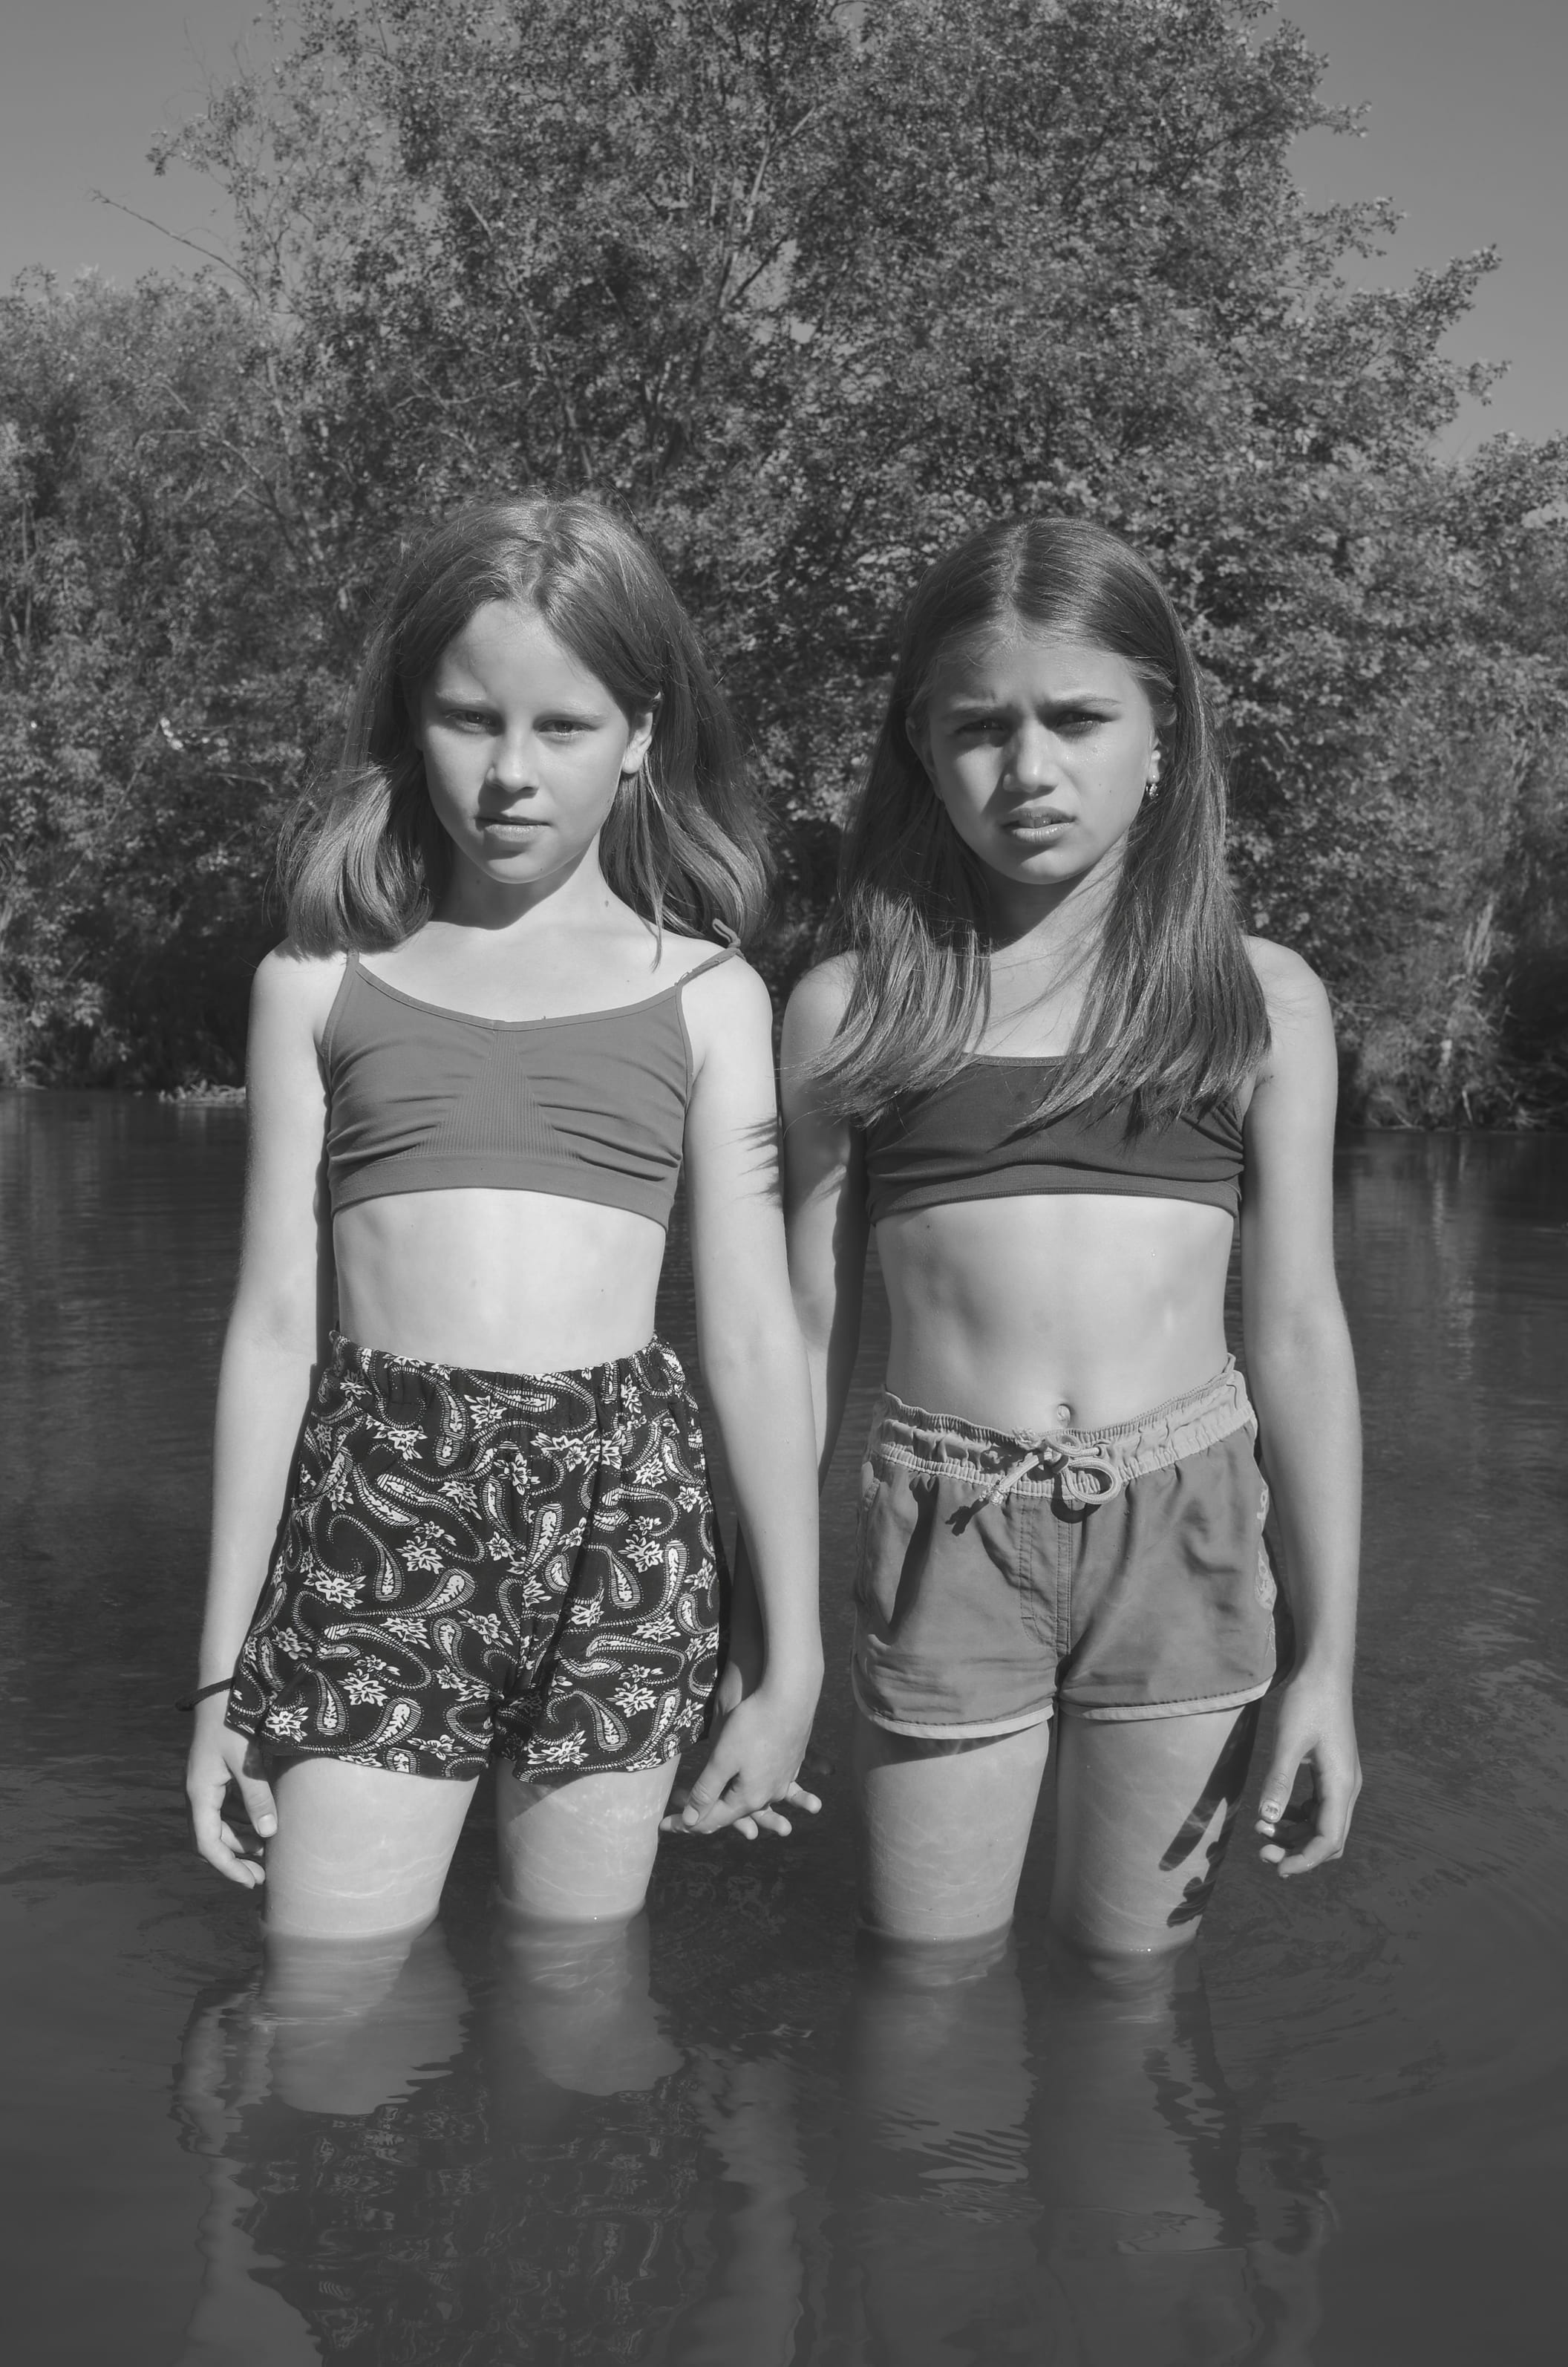 Children pictured by Kristina Rozhkova, 'The Bliss of Girlhood'